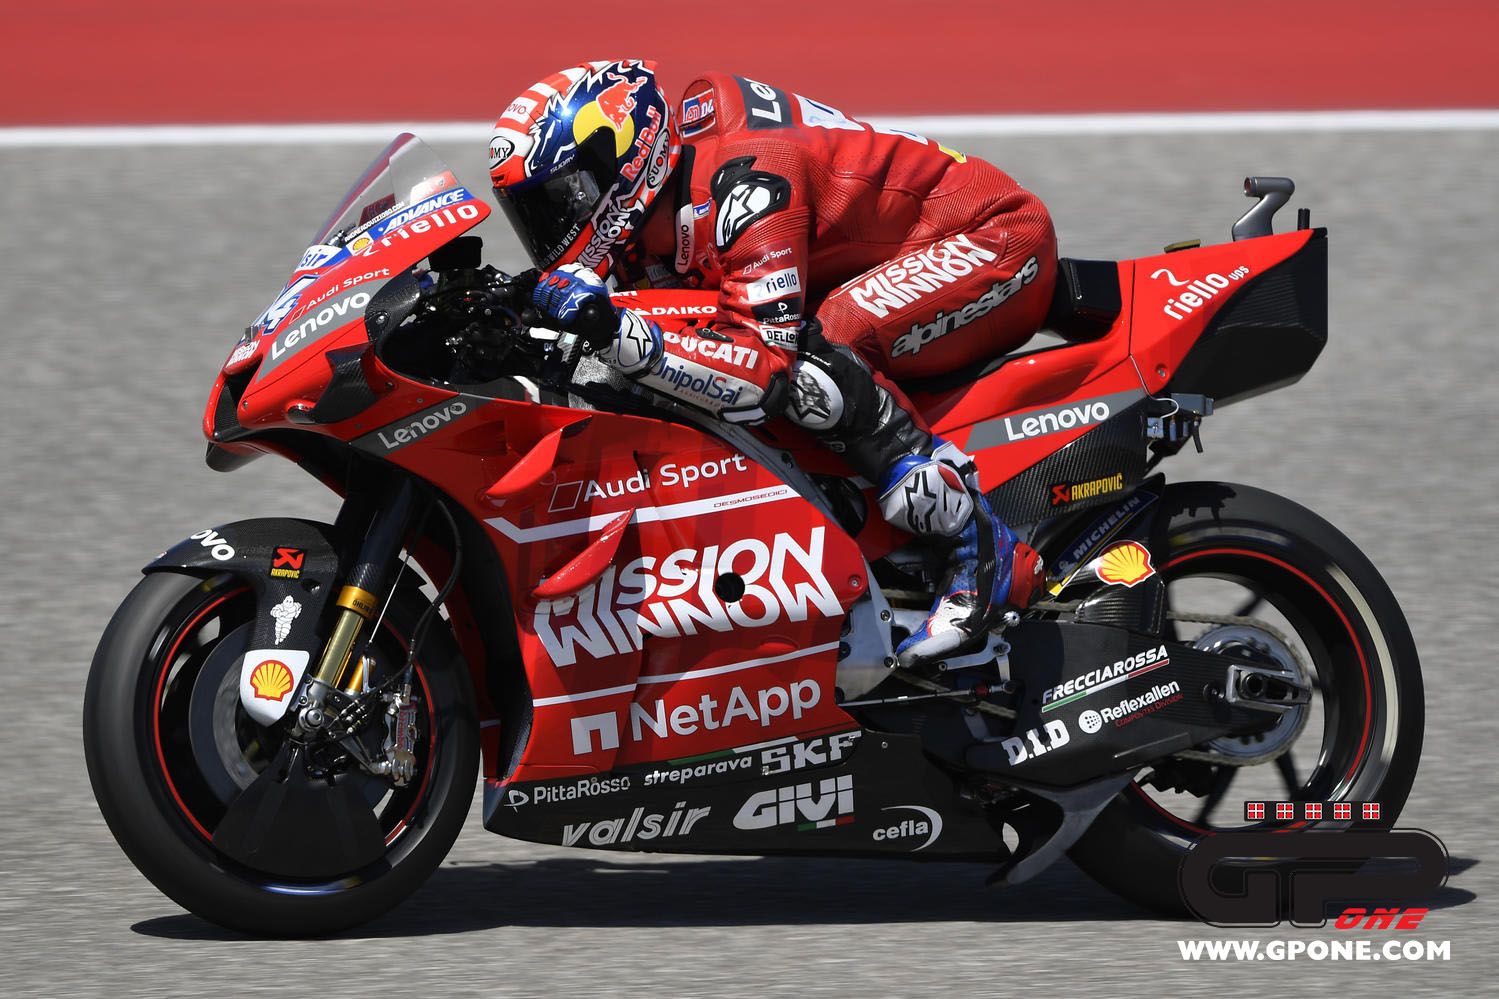 MotoGP, Dovizioso, Stoner, Lorenzo Ducati seeks four in a row at Mugello GPone